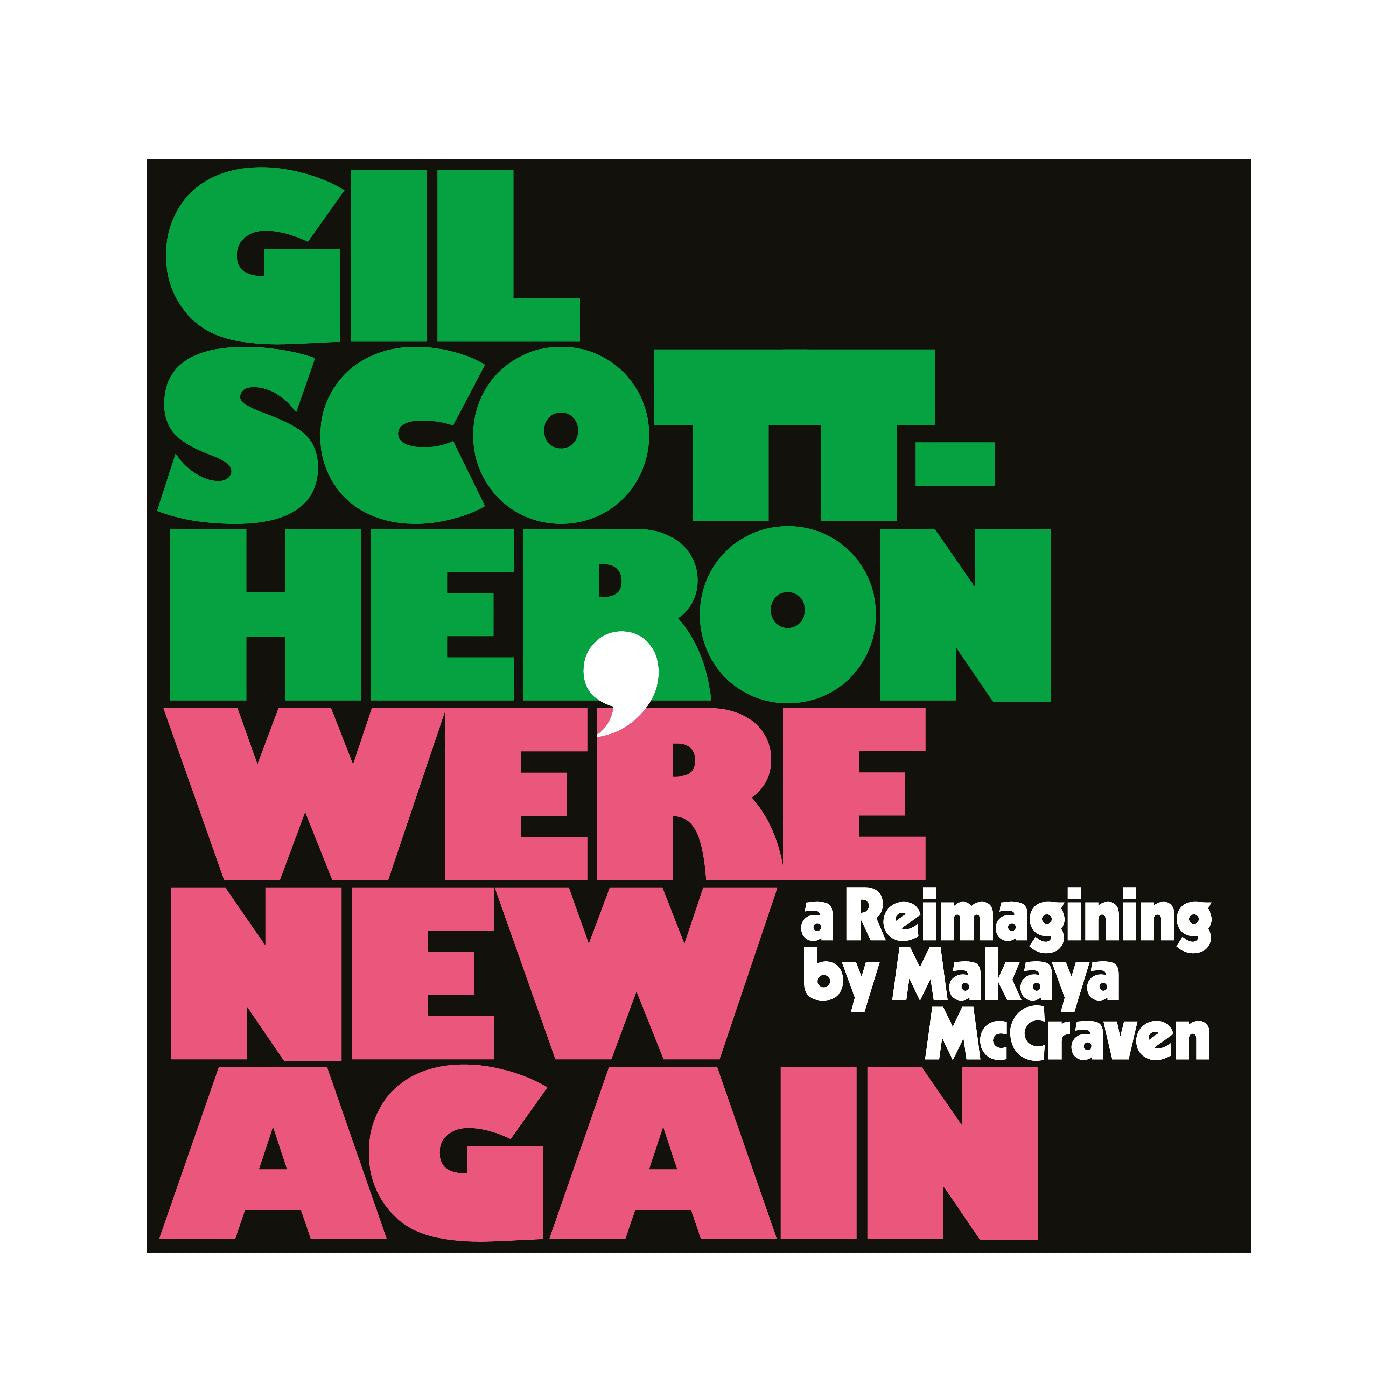 Gil Scott-Heron - We're New Again - A Reimagining by Makaya McCraven